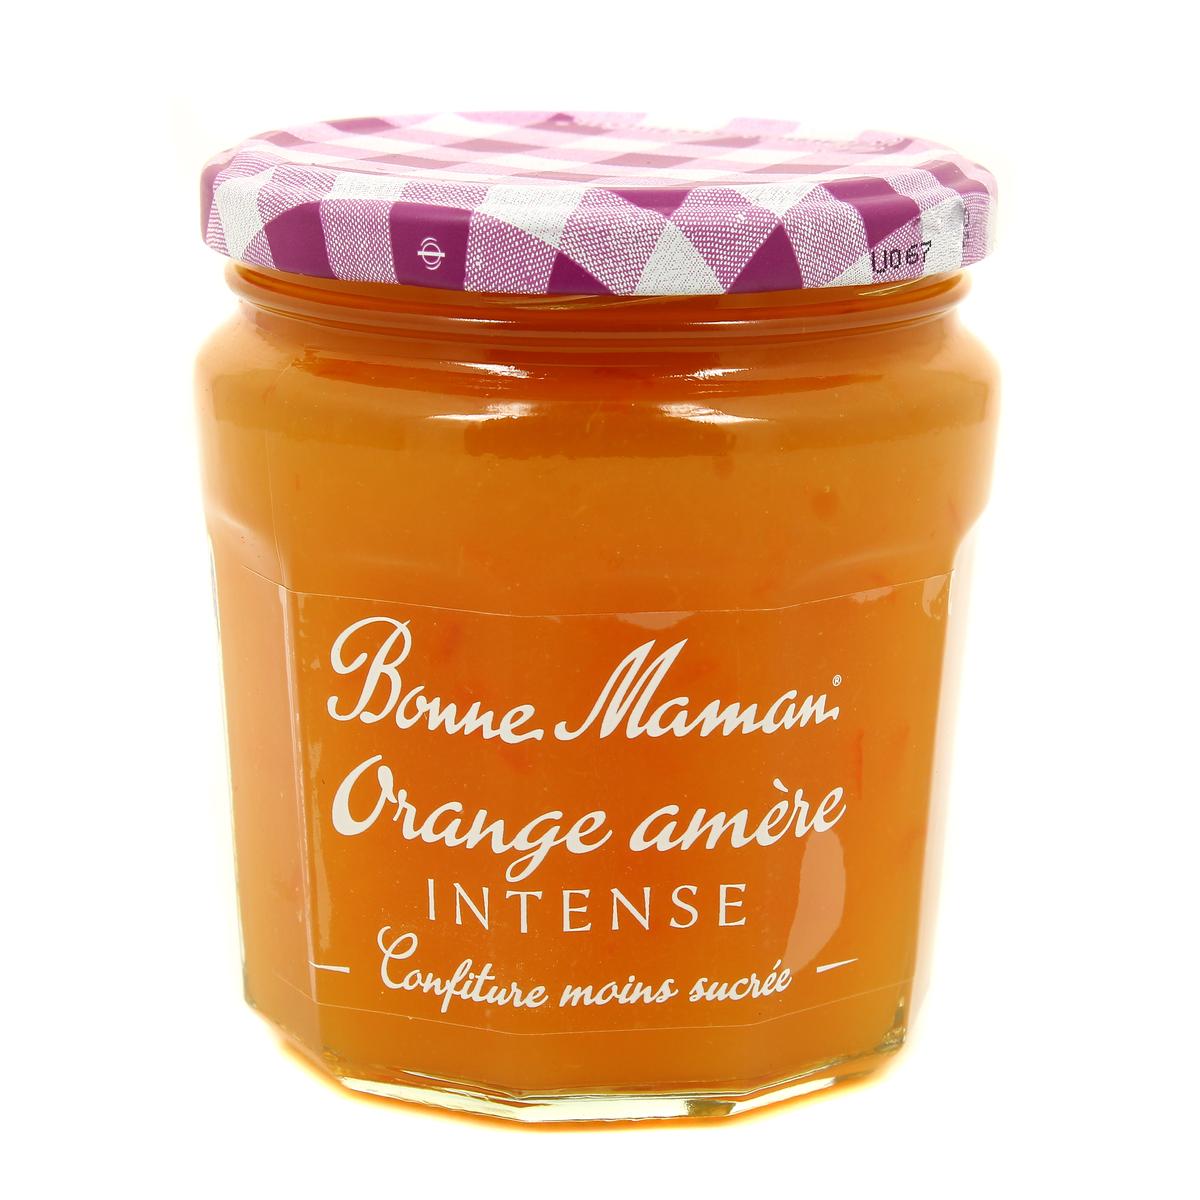 Confiture abricot intense, Bonne Maman (335 g)